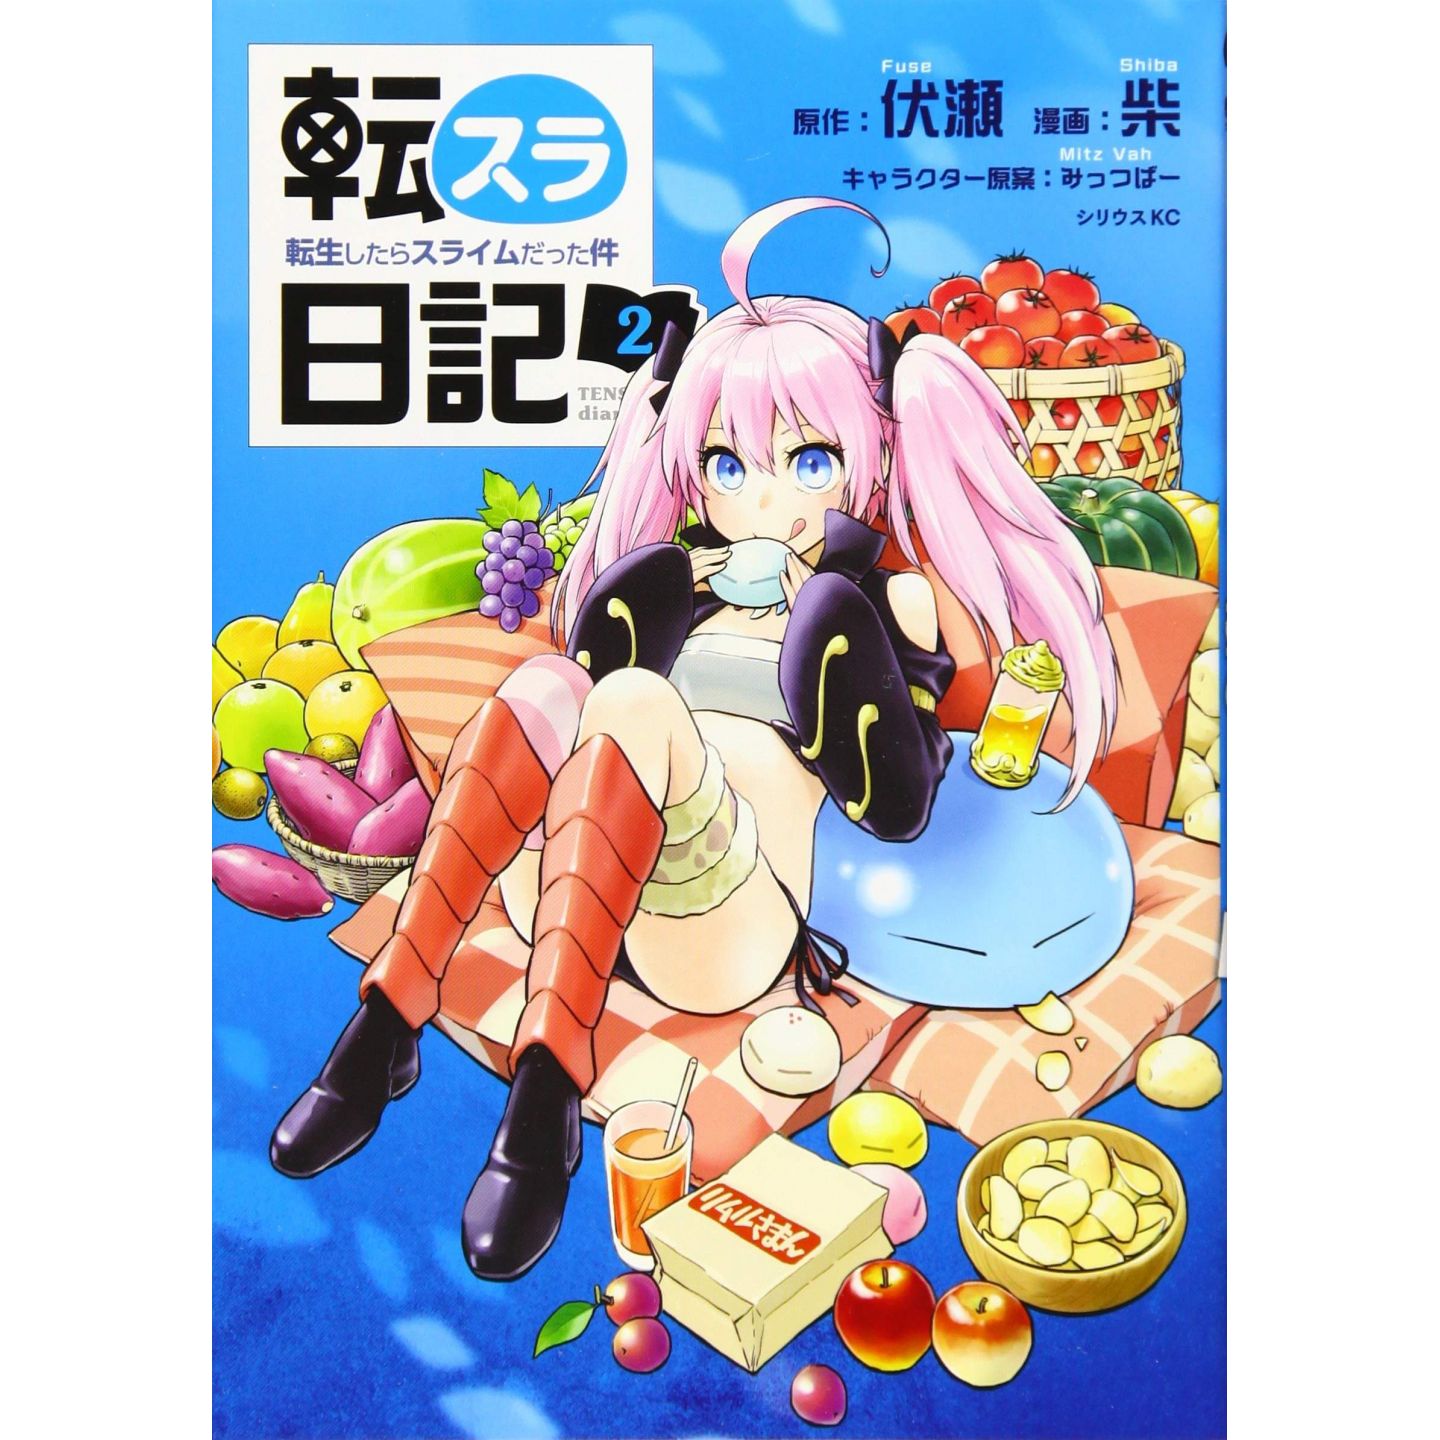 CDJapan : ANIME Bros. #2 [Cover & Top Feature] Tensei Shitara Slimedatta  Ken (TOKYO NEWS MOOK) Tokyo News Tsushinsha BOOK